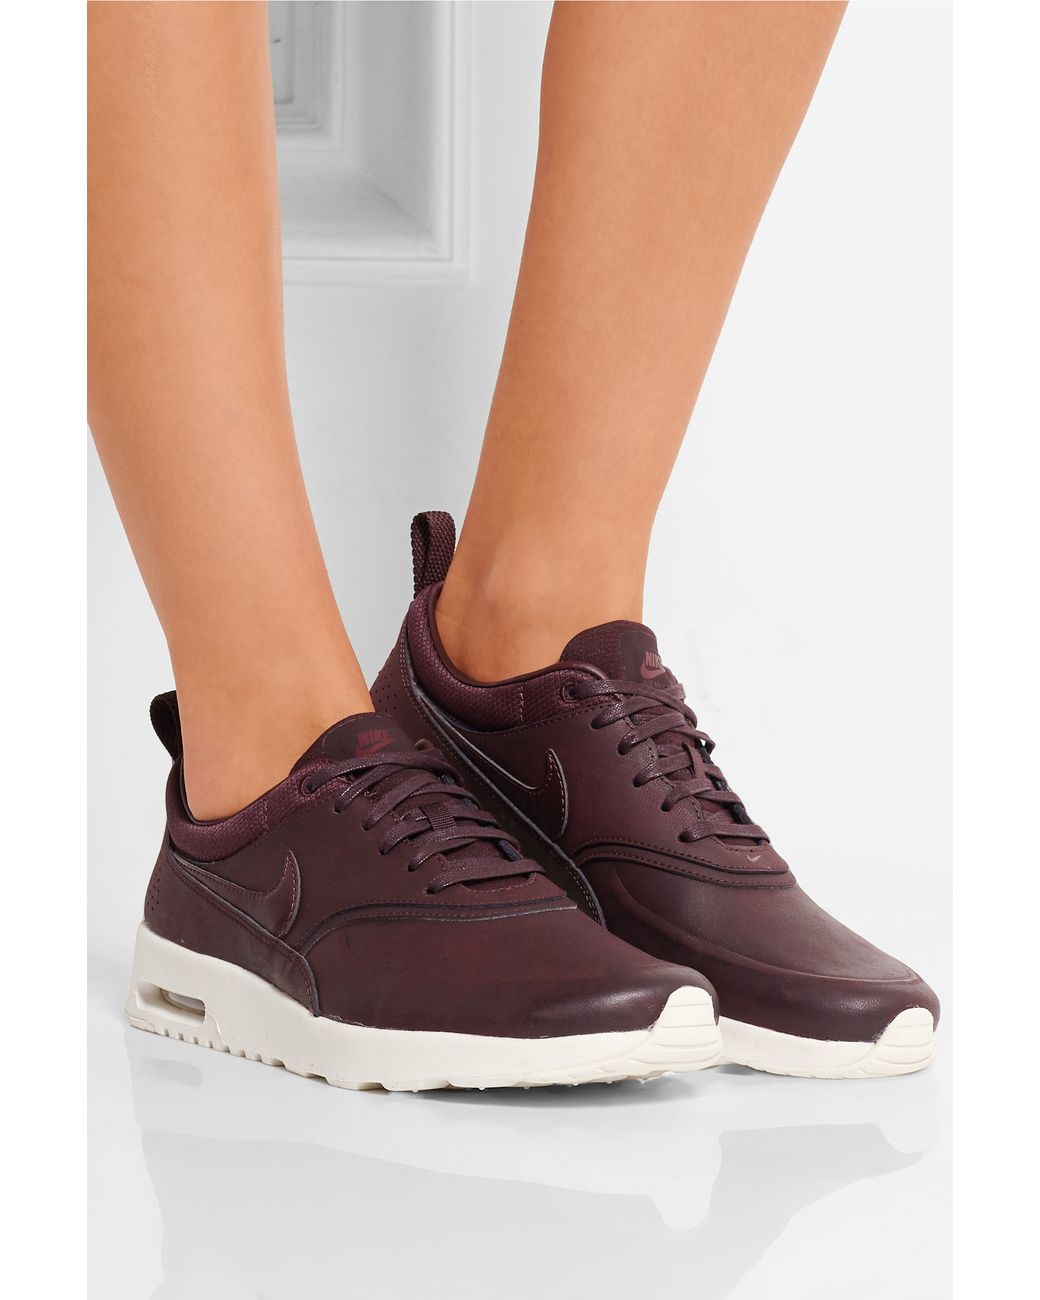 Nike Air Max Thea Premium Leather Sneakers in Purple | Lyst UK